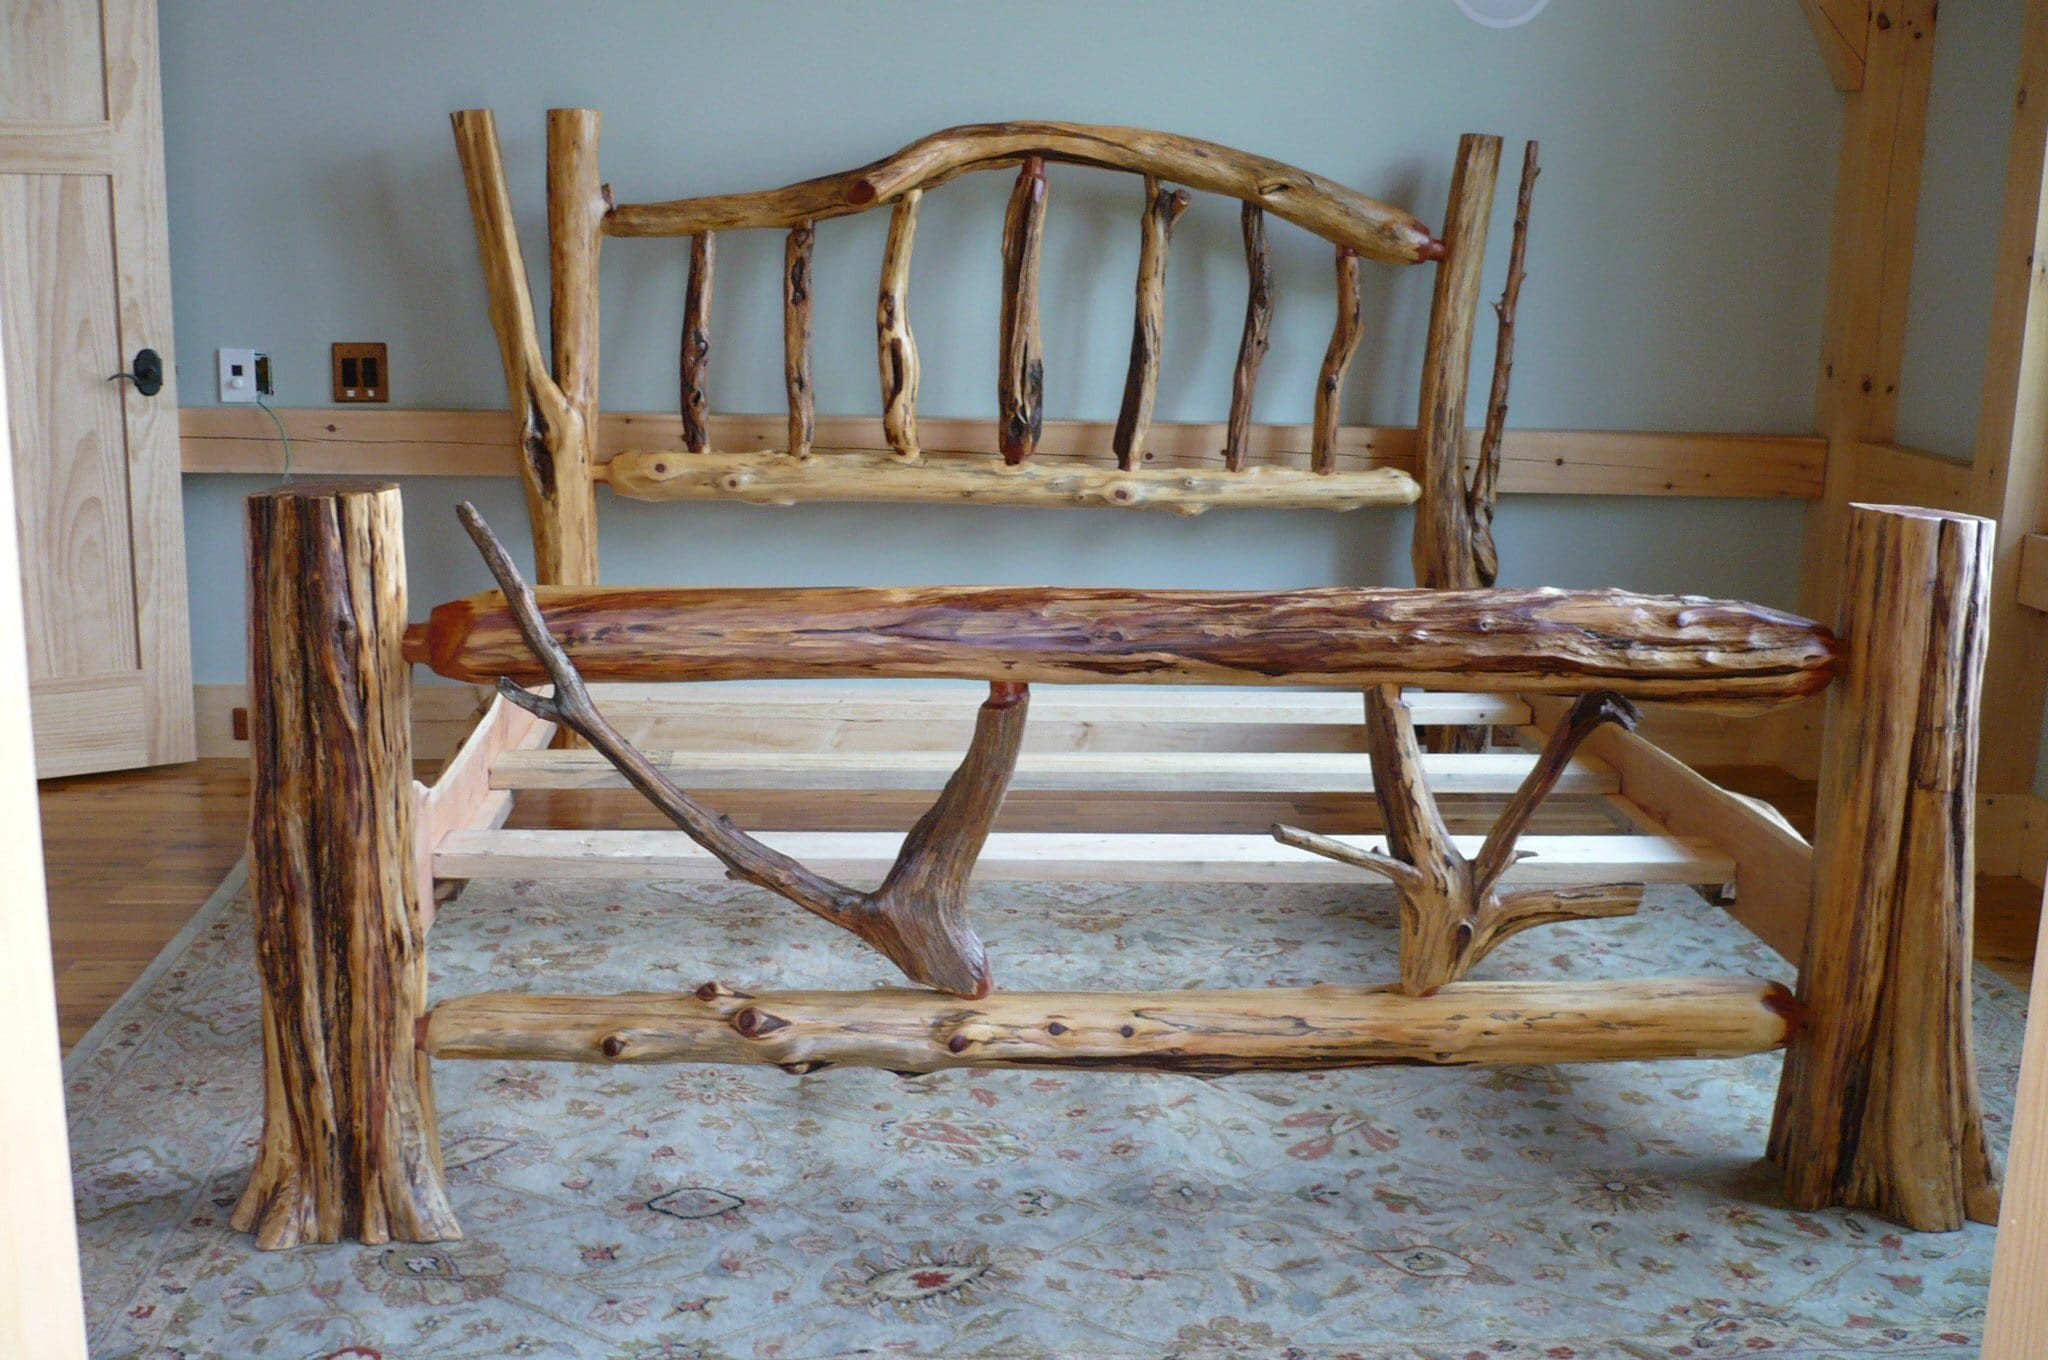 Rustic Log Bedroom Furniture
 Rustic Log Beds